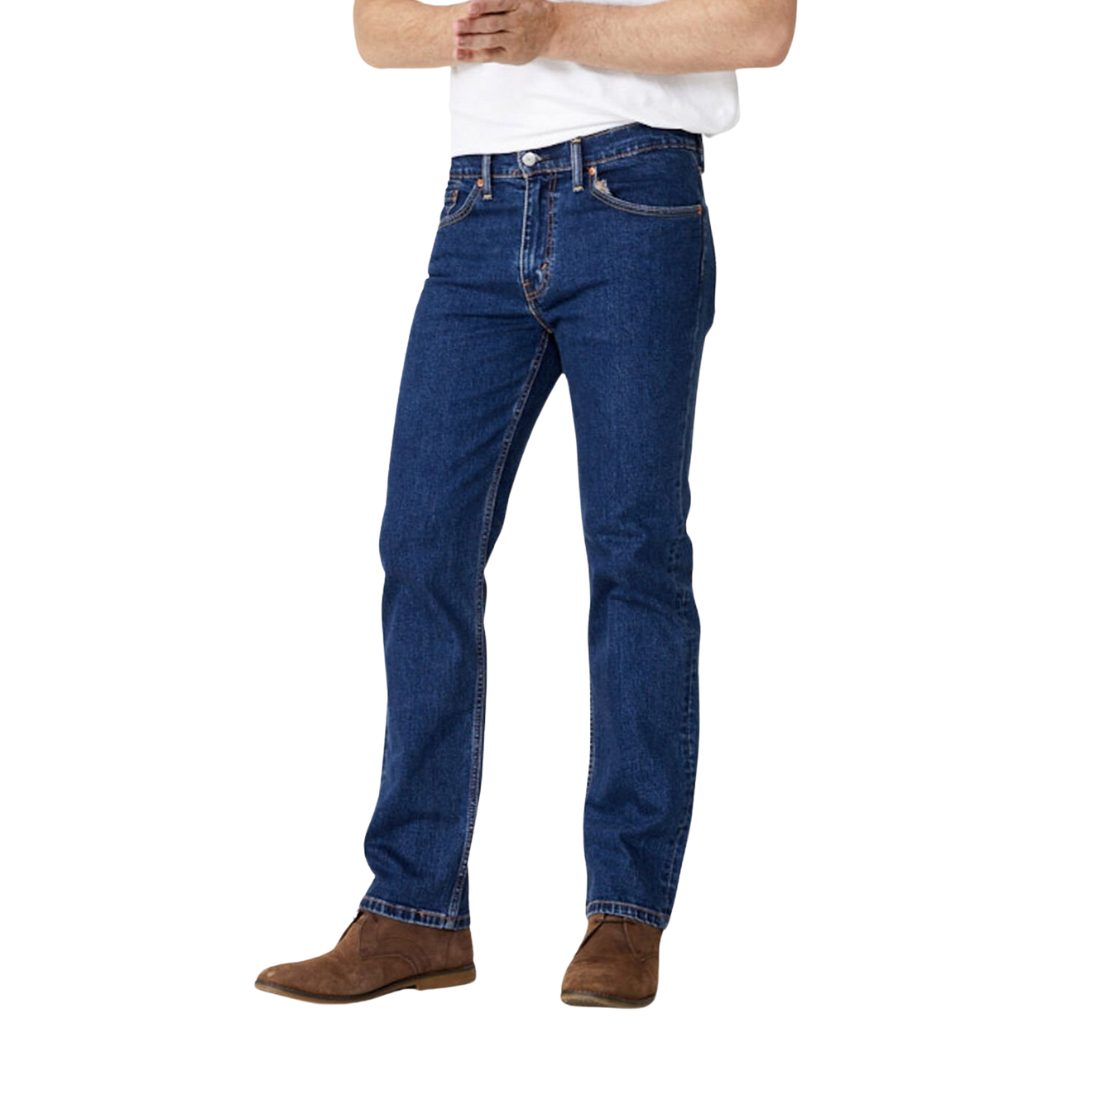 Levis® 516 Standard Striaght Jean 3130 Dk Stwsh Mens Jeans by Levis | The Bloke Shop